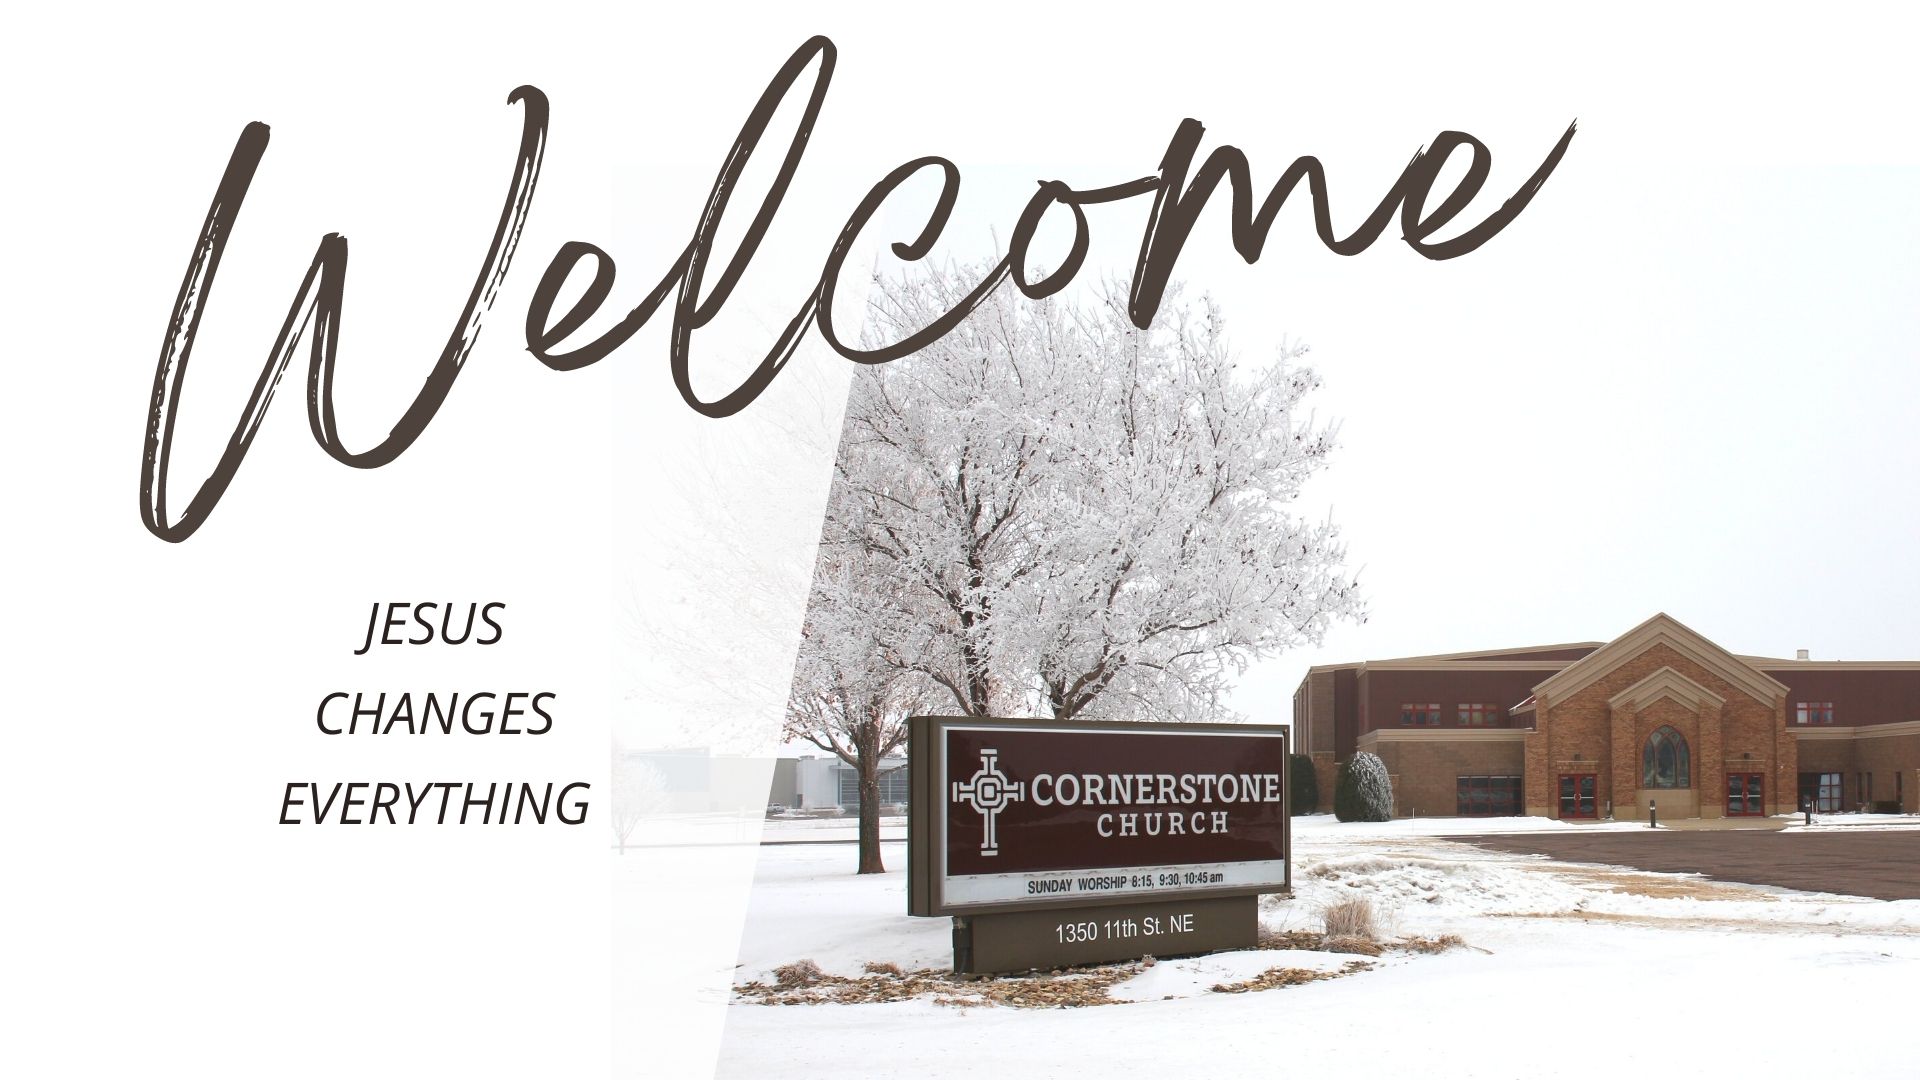 Cornerstone Church | Jesus Changes Everything